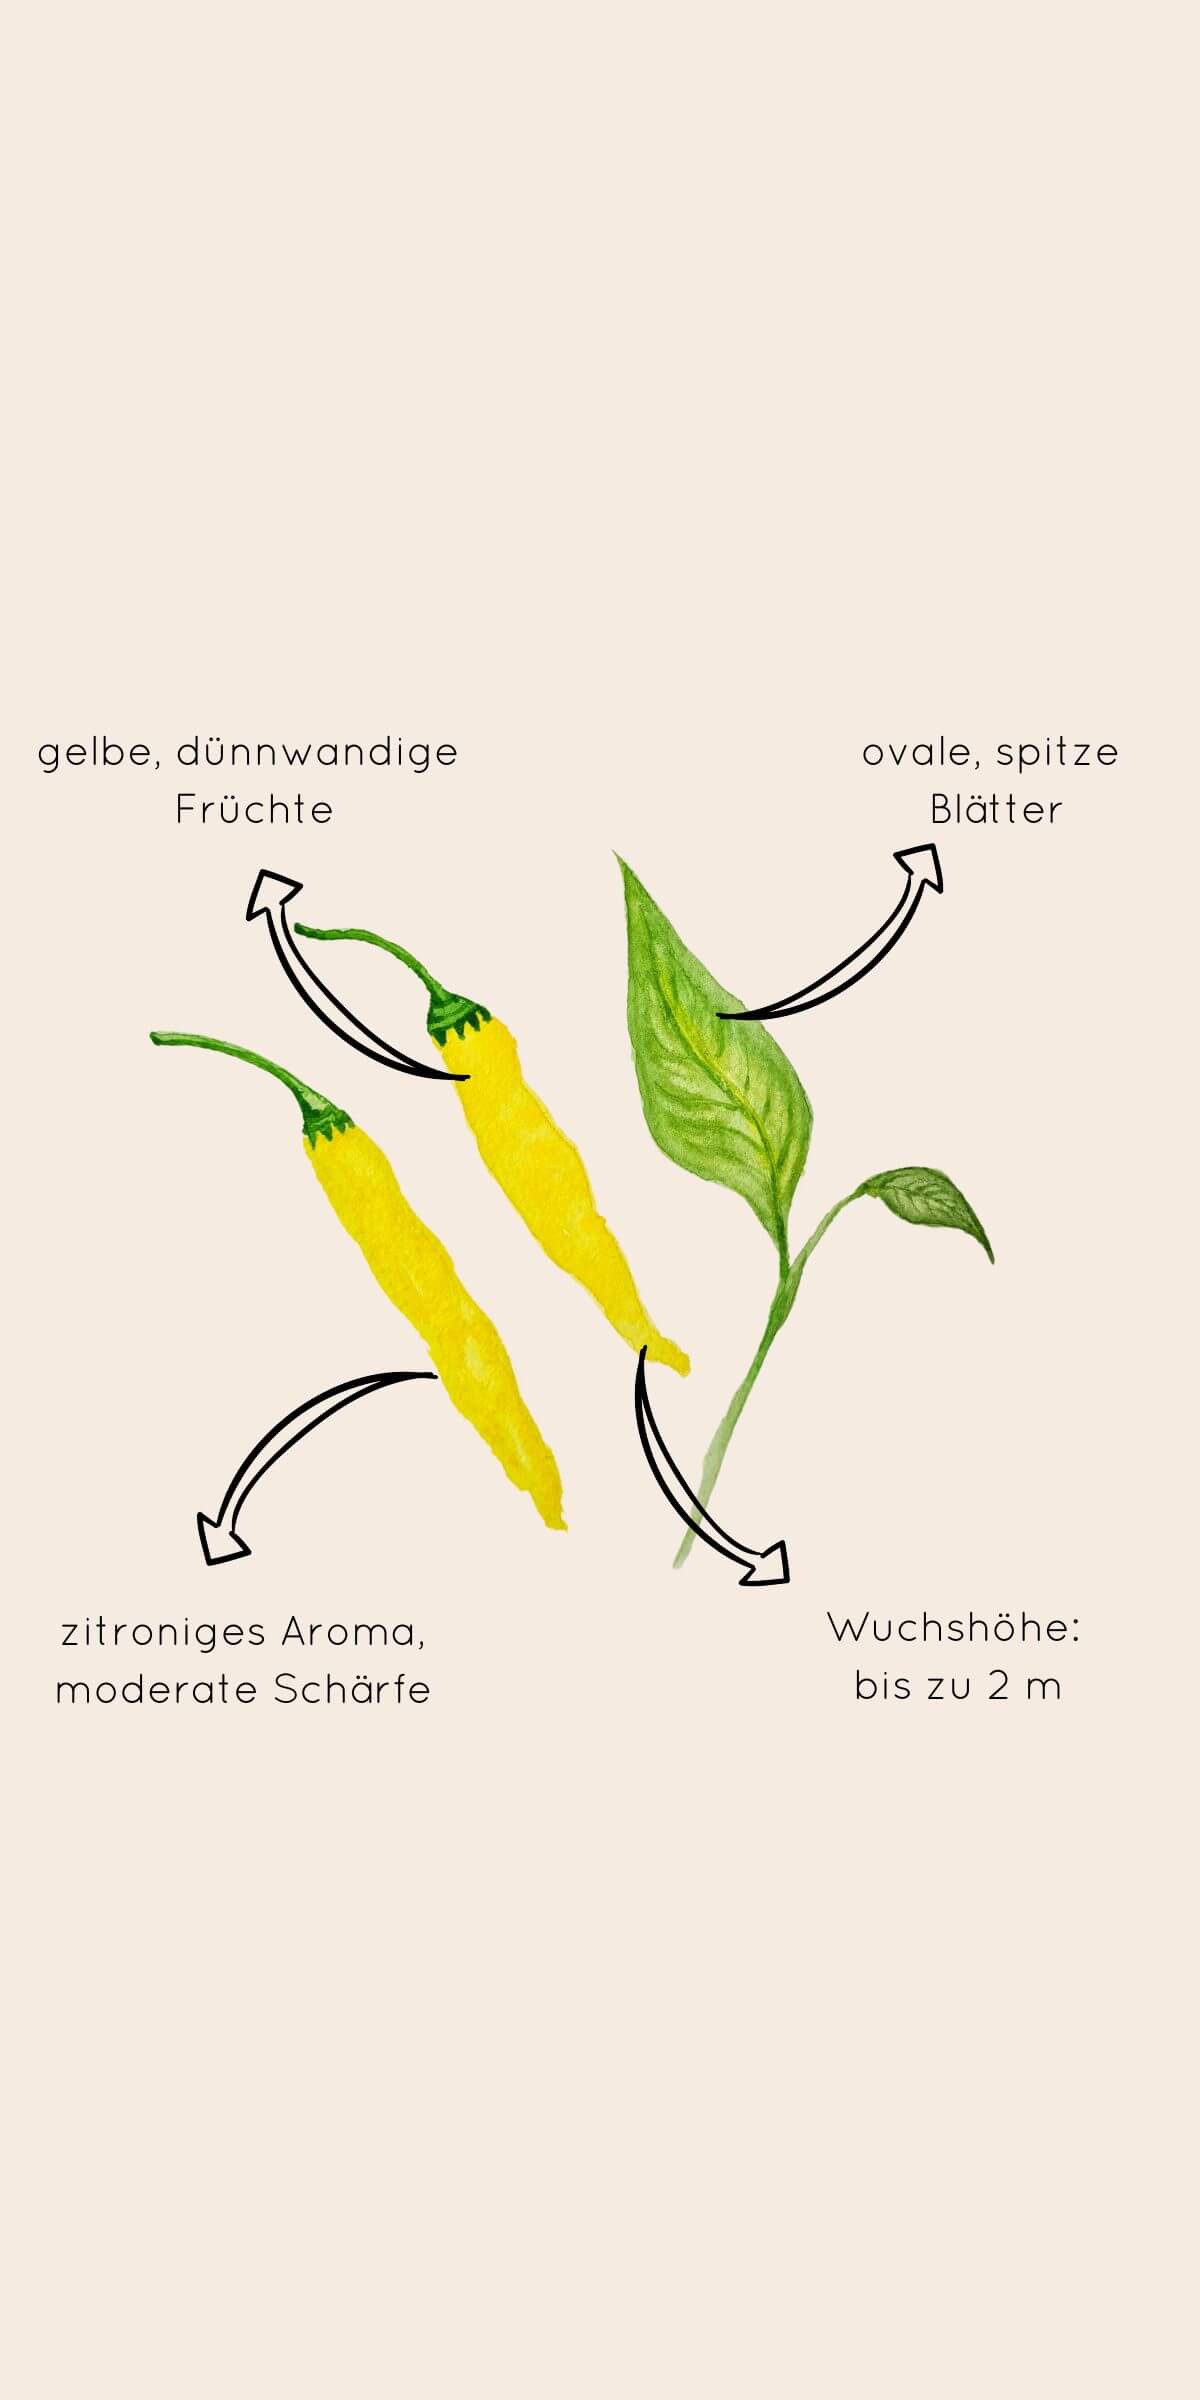 Beschreibung des Aussehens der Chili "Lemon Drop"